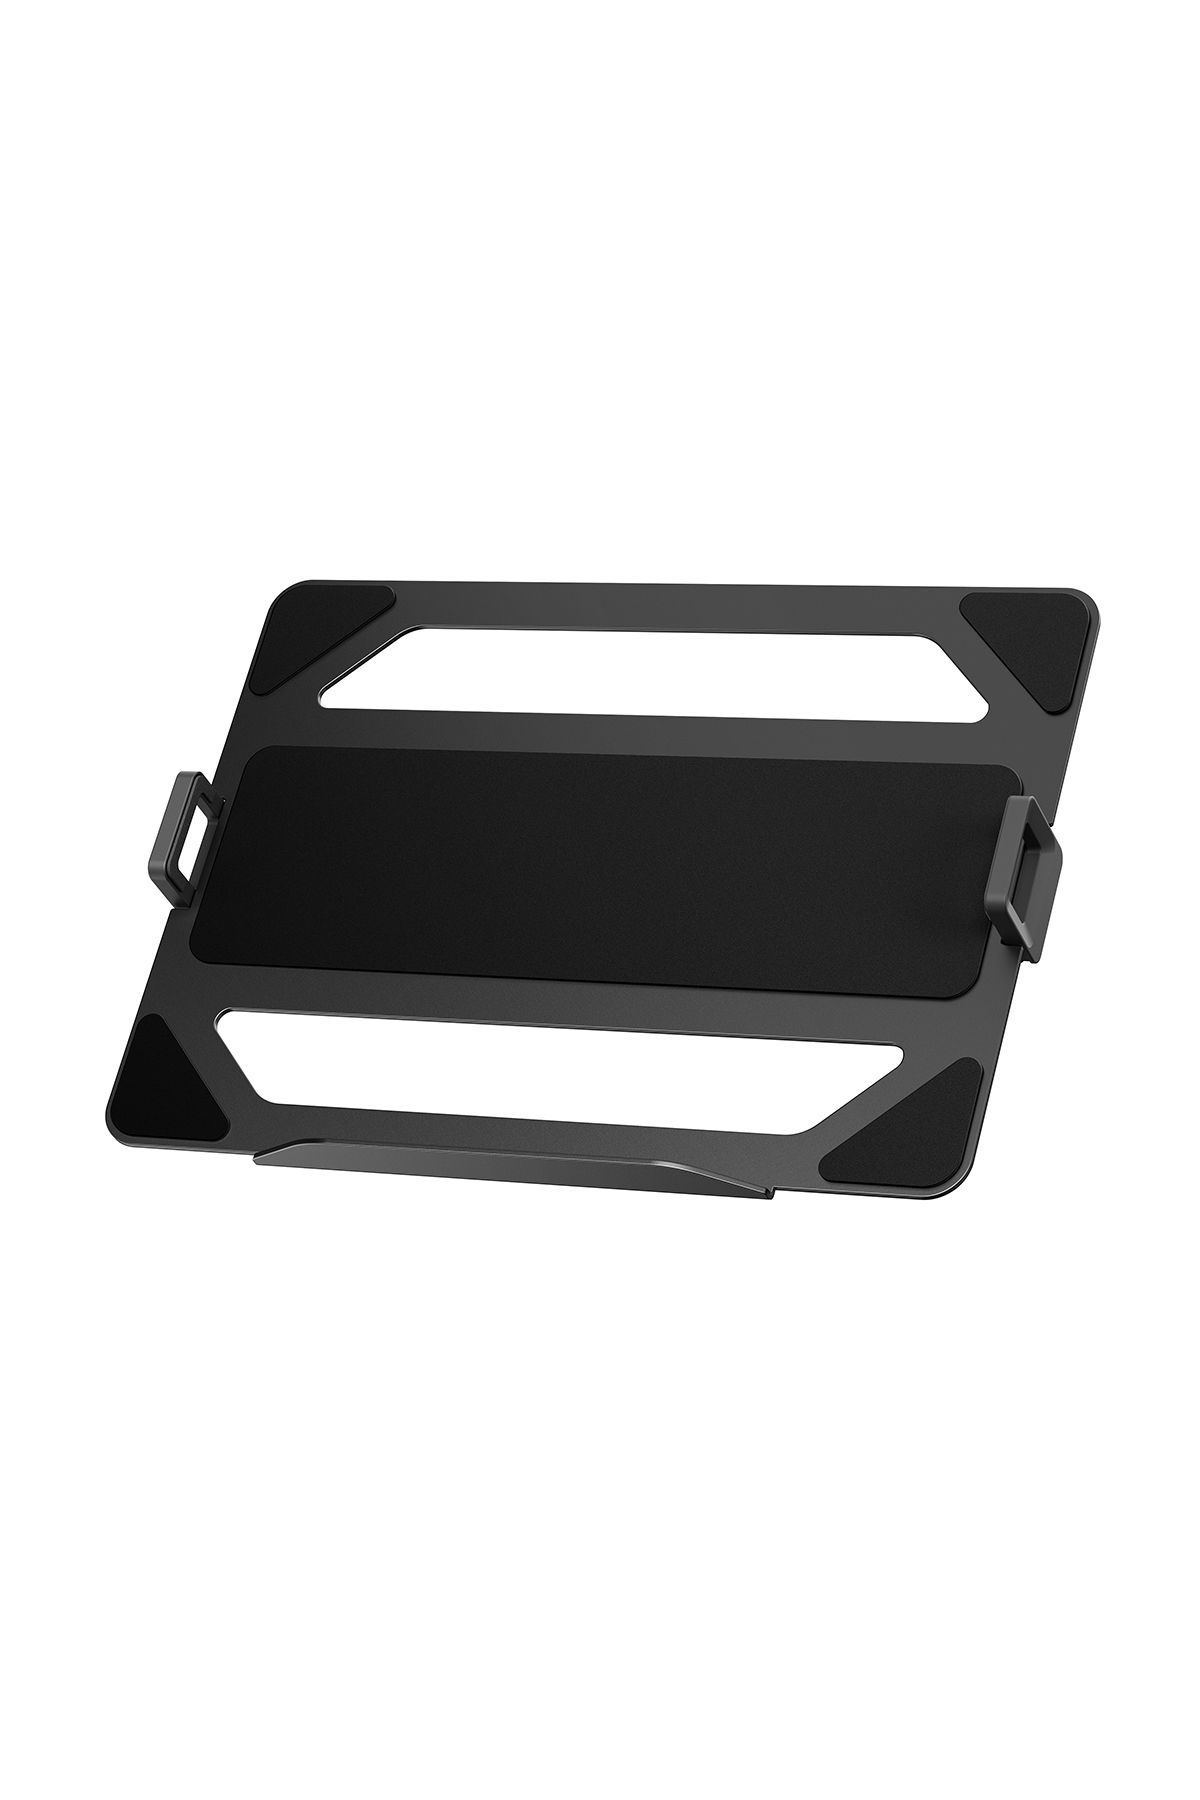 XDrive Metal Laptop Standı ( Monitör Standları İçin 11,6"-17,3" VESA Uyumlu )